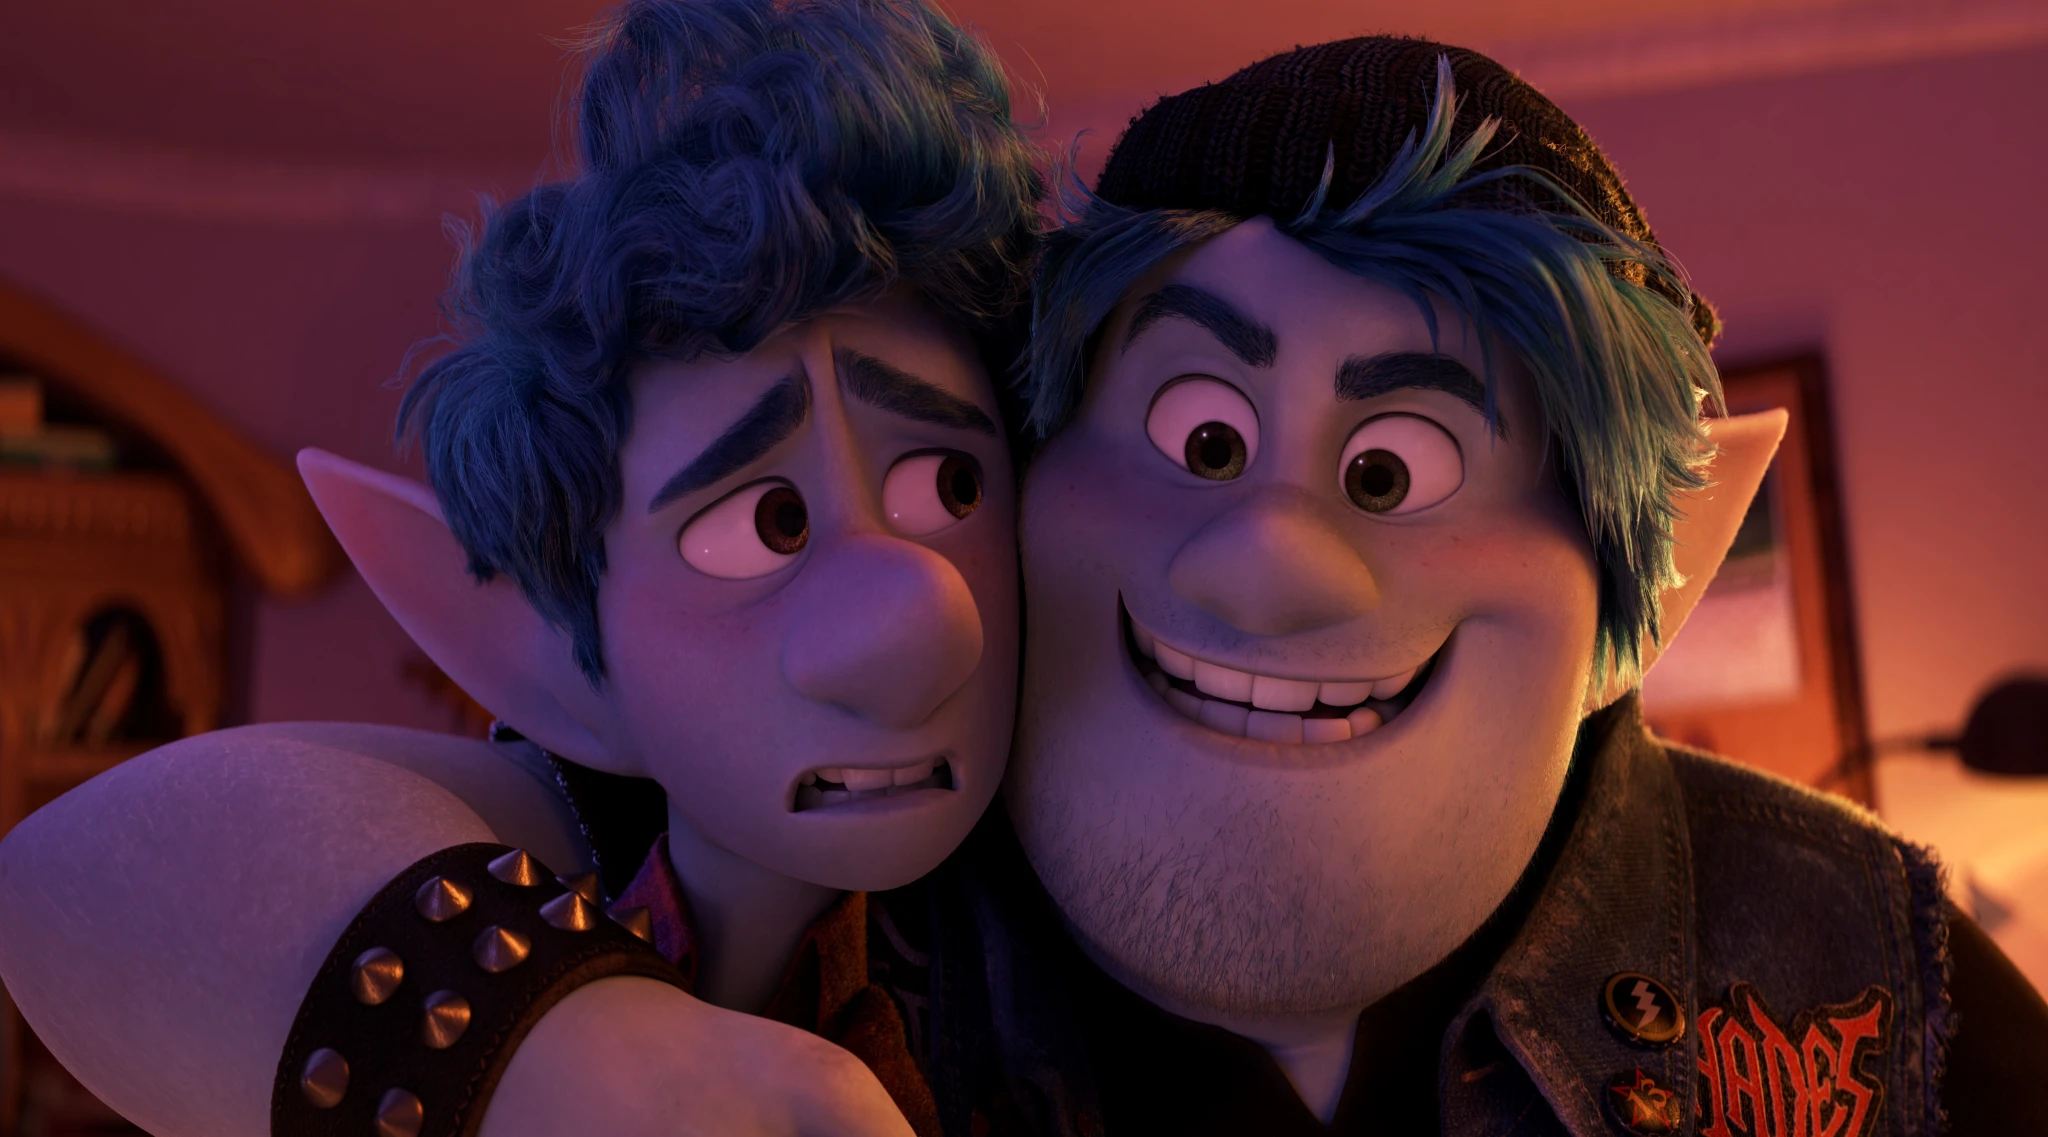 Dan Scanlon Shares the Real Sibling Story Behind Pixar's 'Onward'